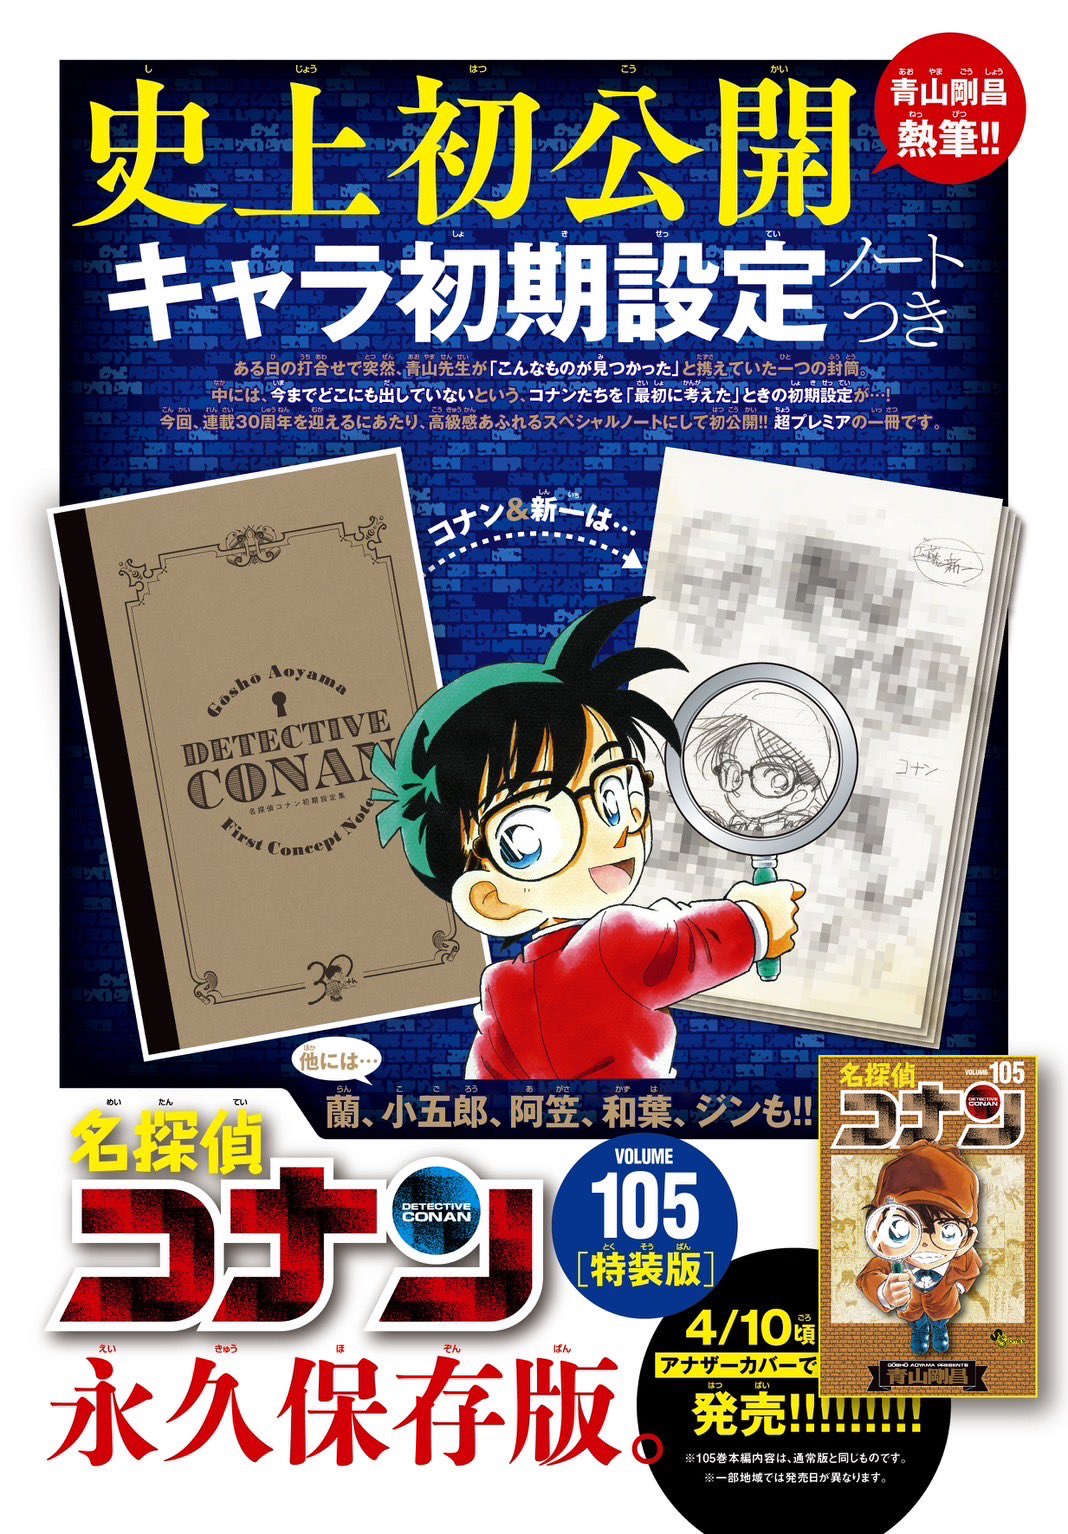 青山剛昌「名探偵コナン」最新刊 第105巻 4月10日発売 – Anime Maps